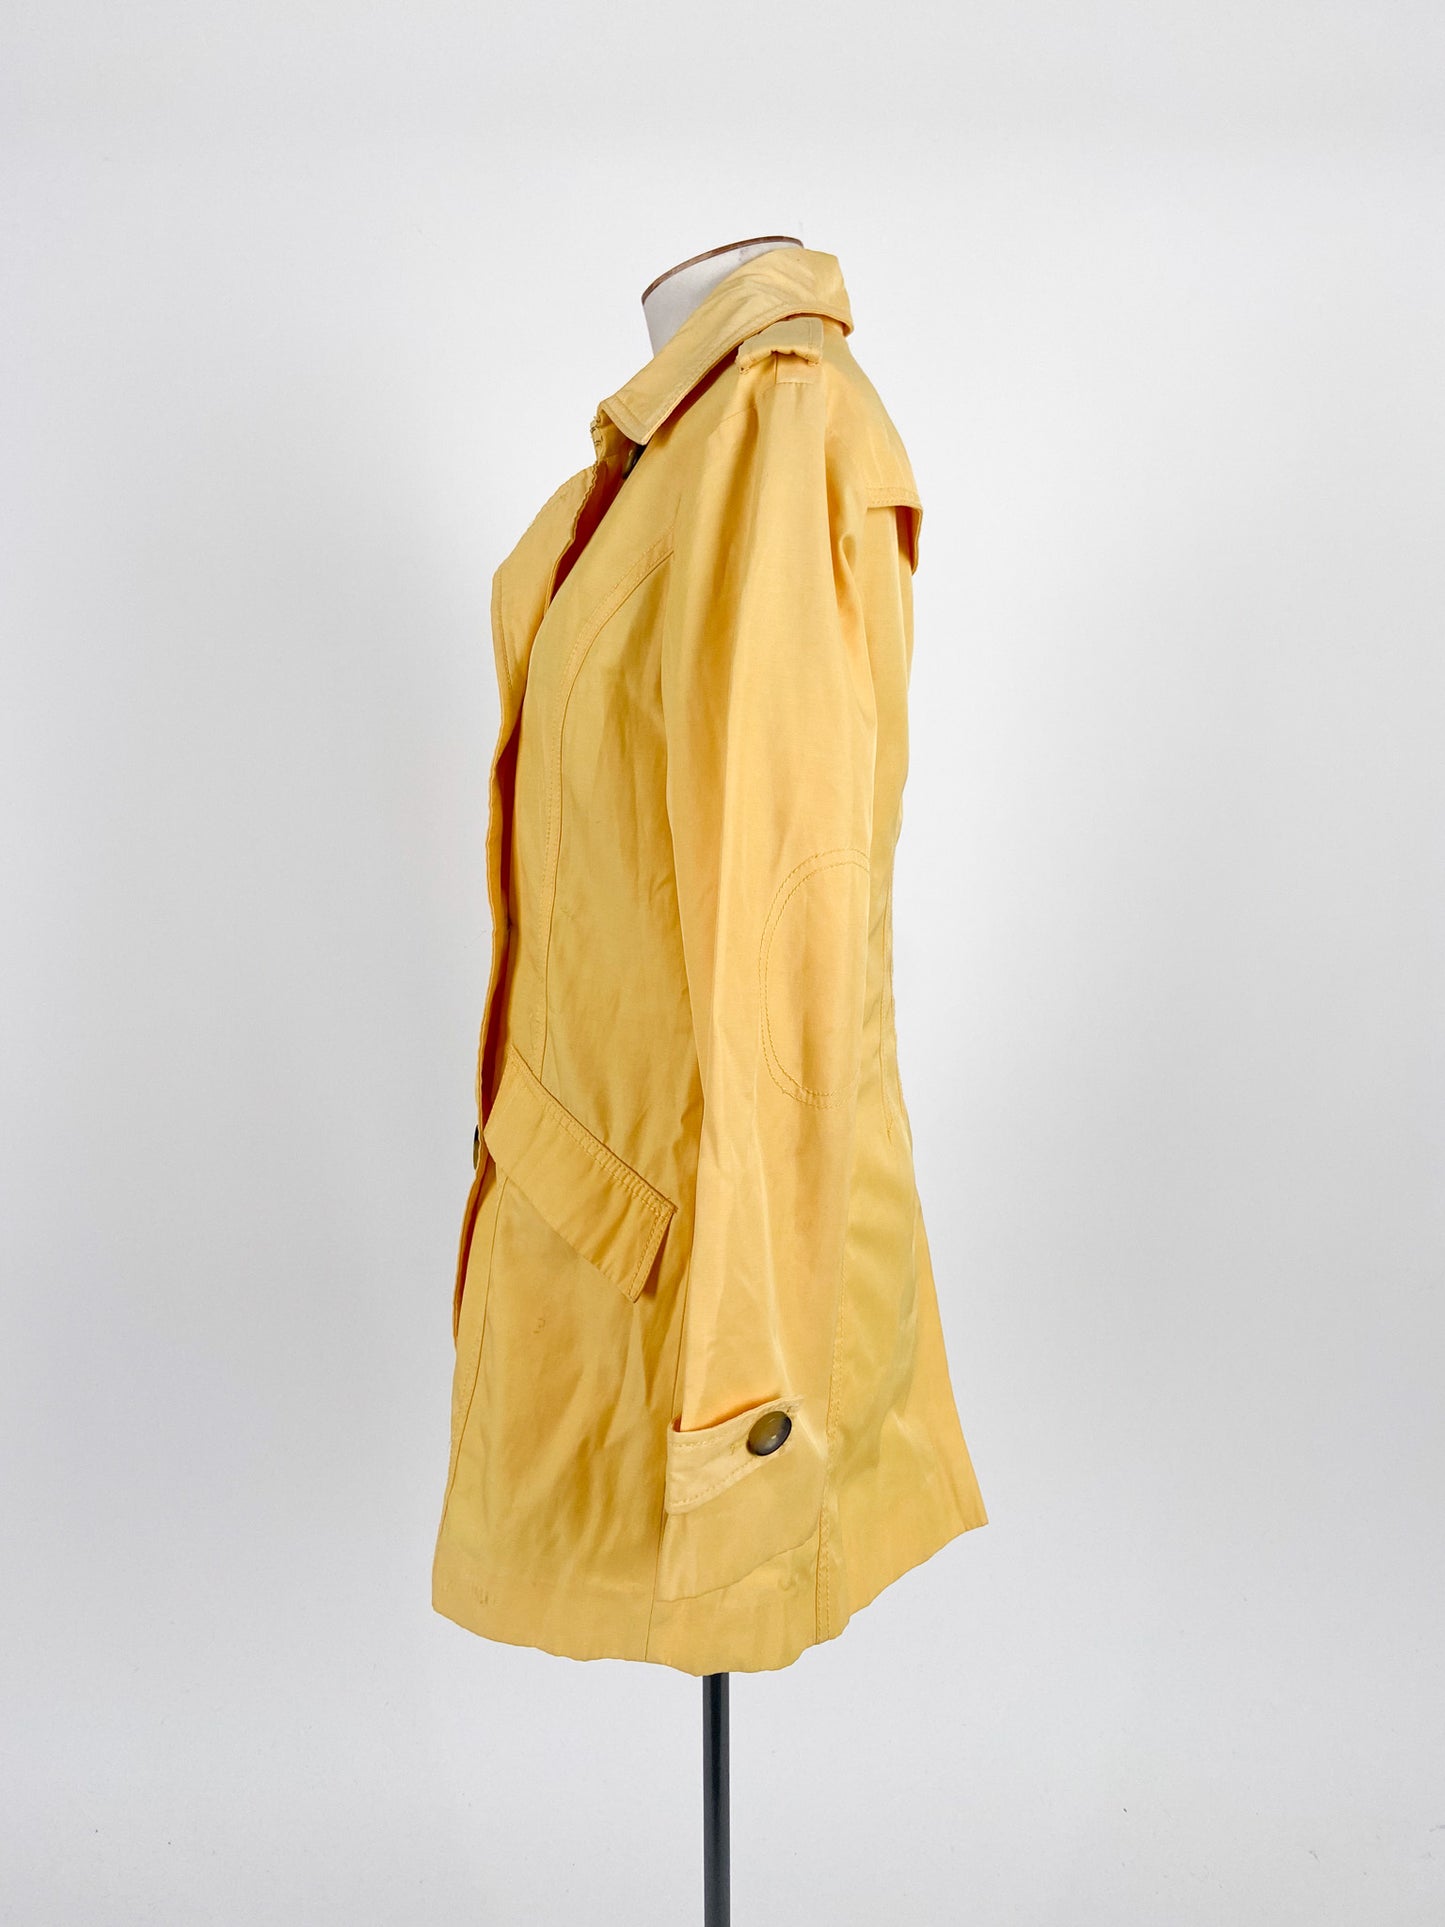 Jones New York | Yellow Casual Jacket | Size S